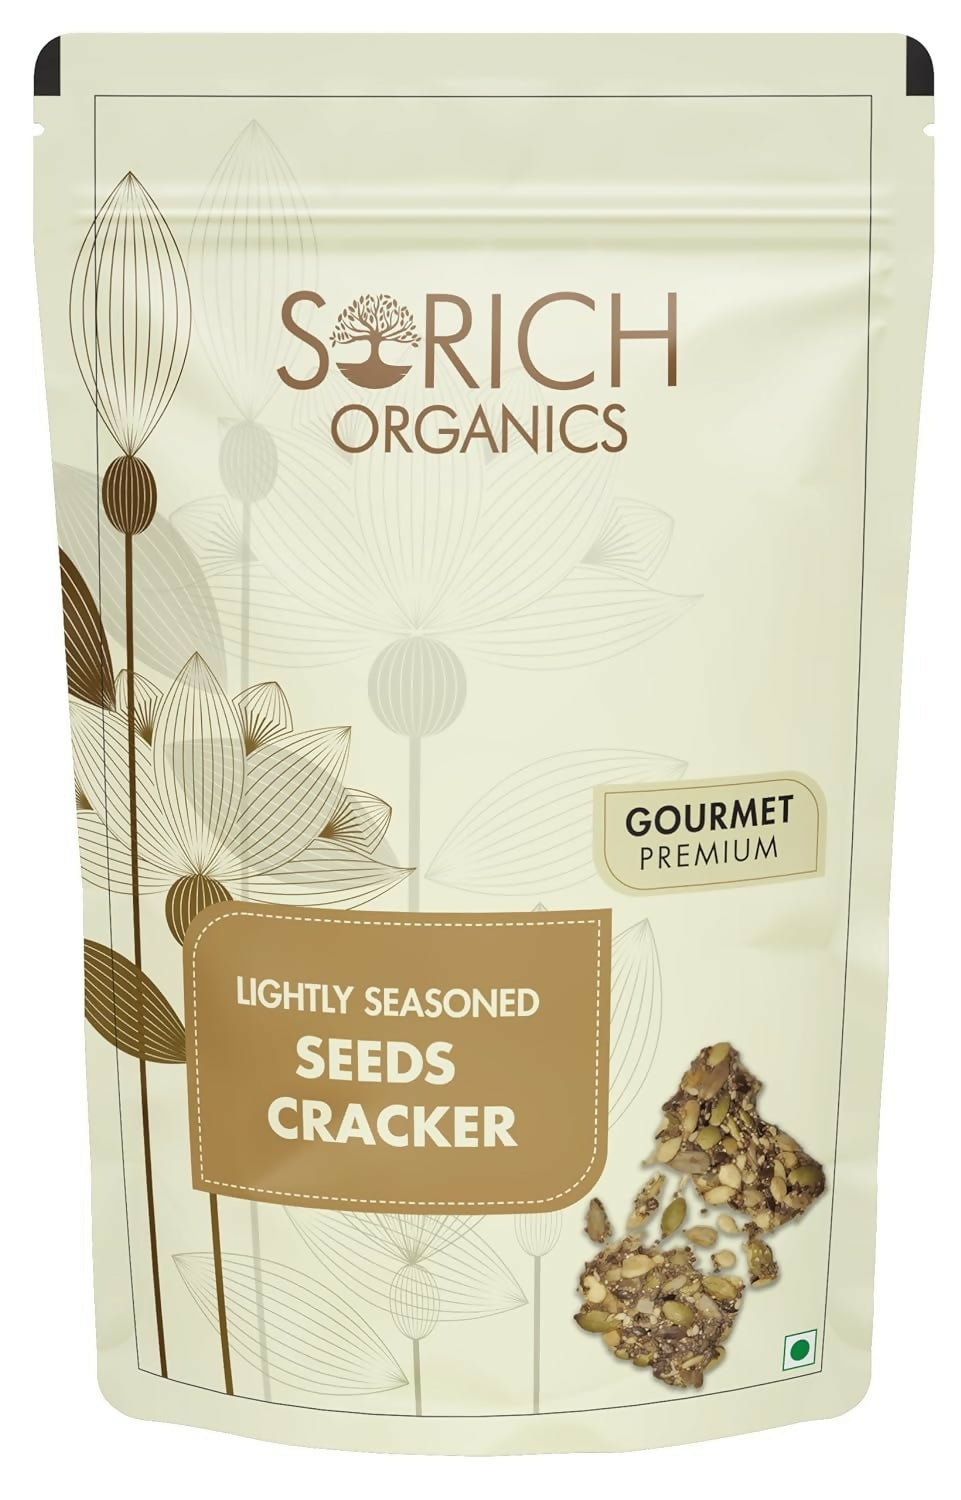 Sorich Organics Lightly Seasoned Seeds Cracker - BUDNE